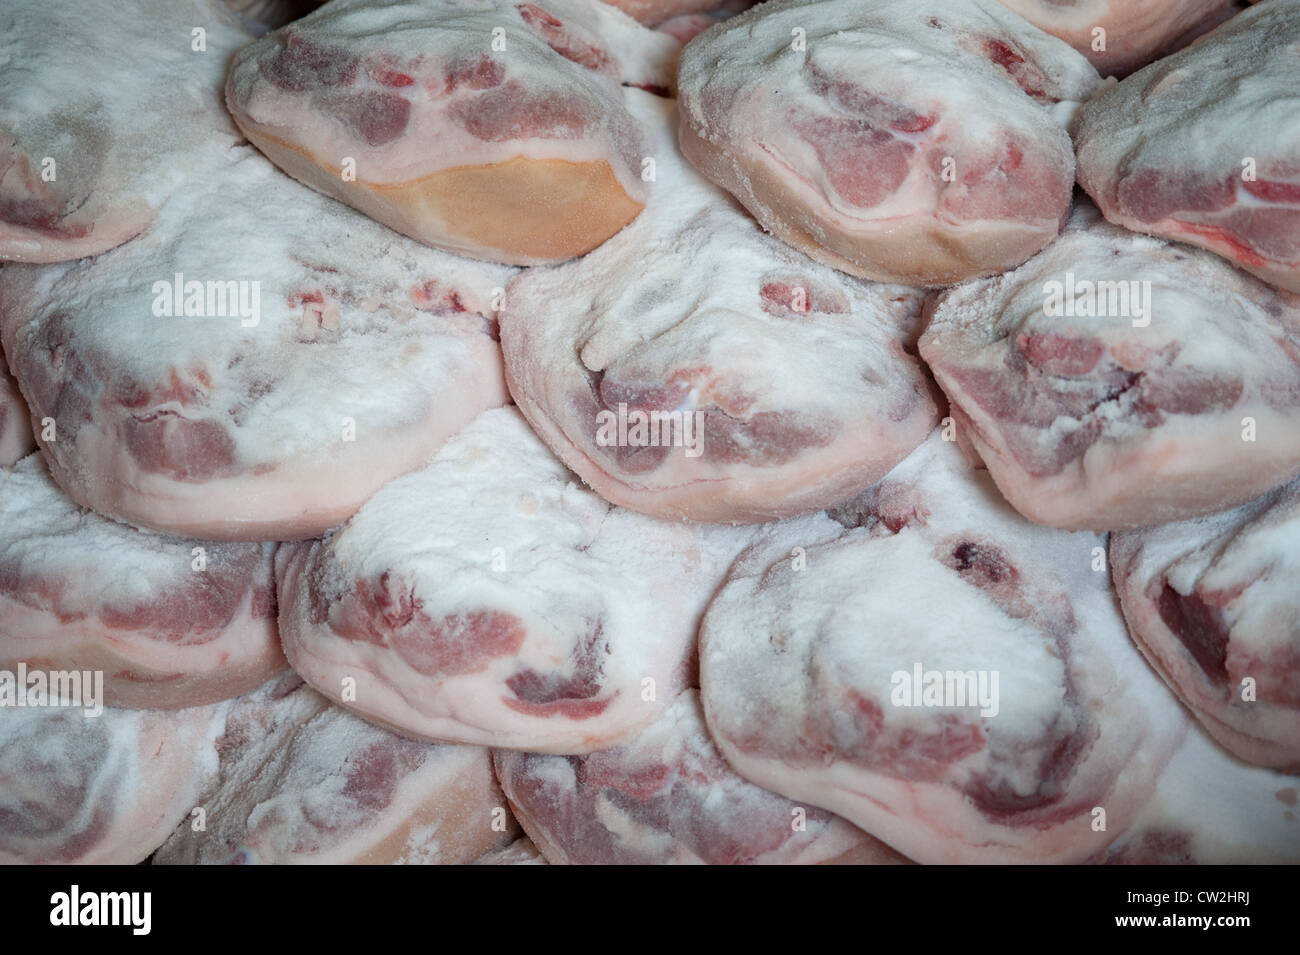 Pile of salt cured hams  Stock Photo